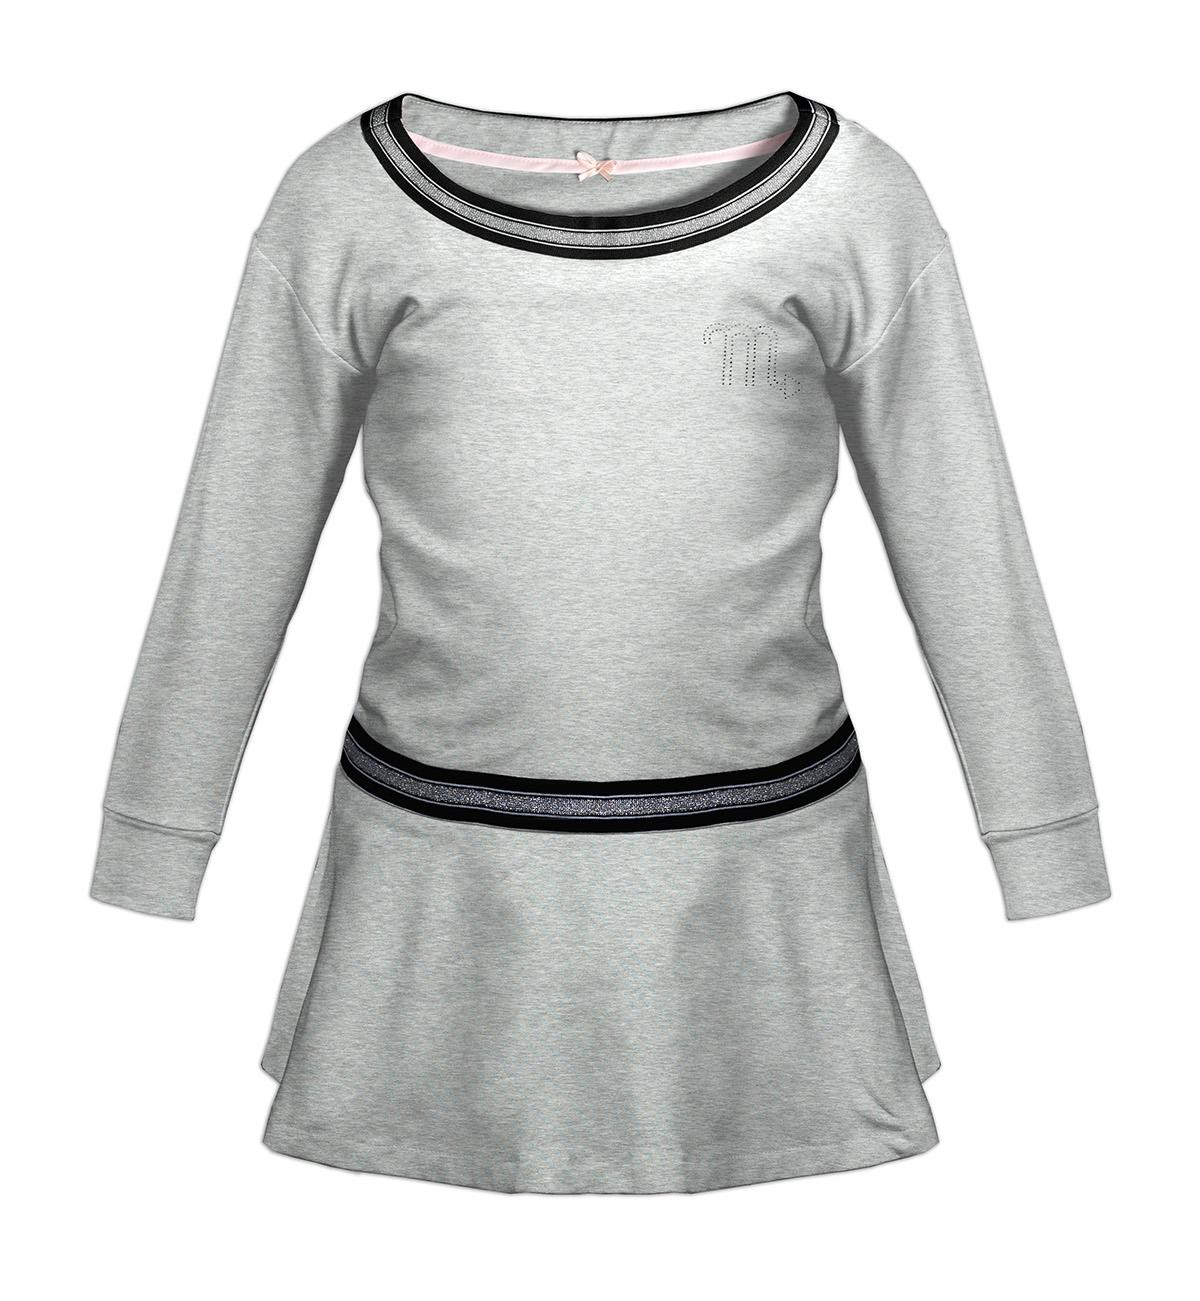 Peplum kid’s blouse with transfer rhinestones (ANGIE) - melange light grey 134-140 - sewing set